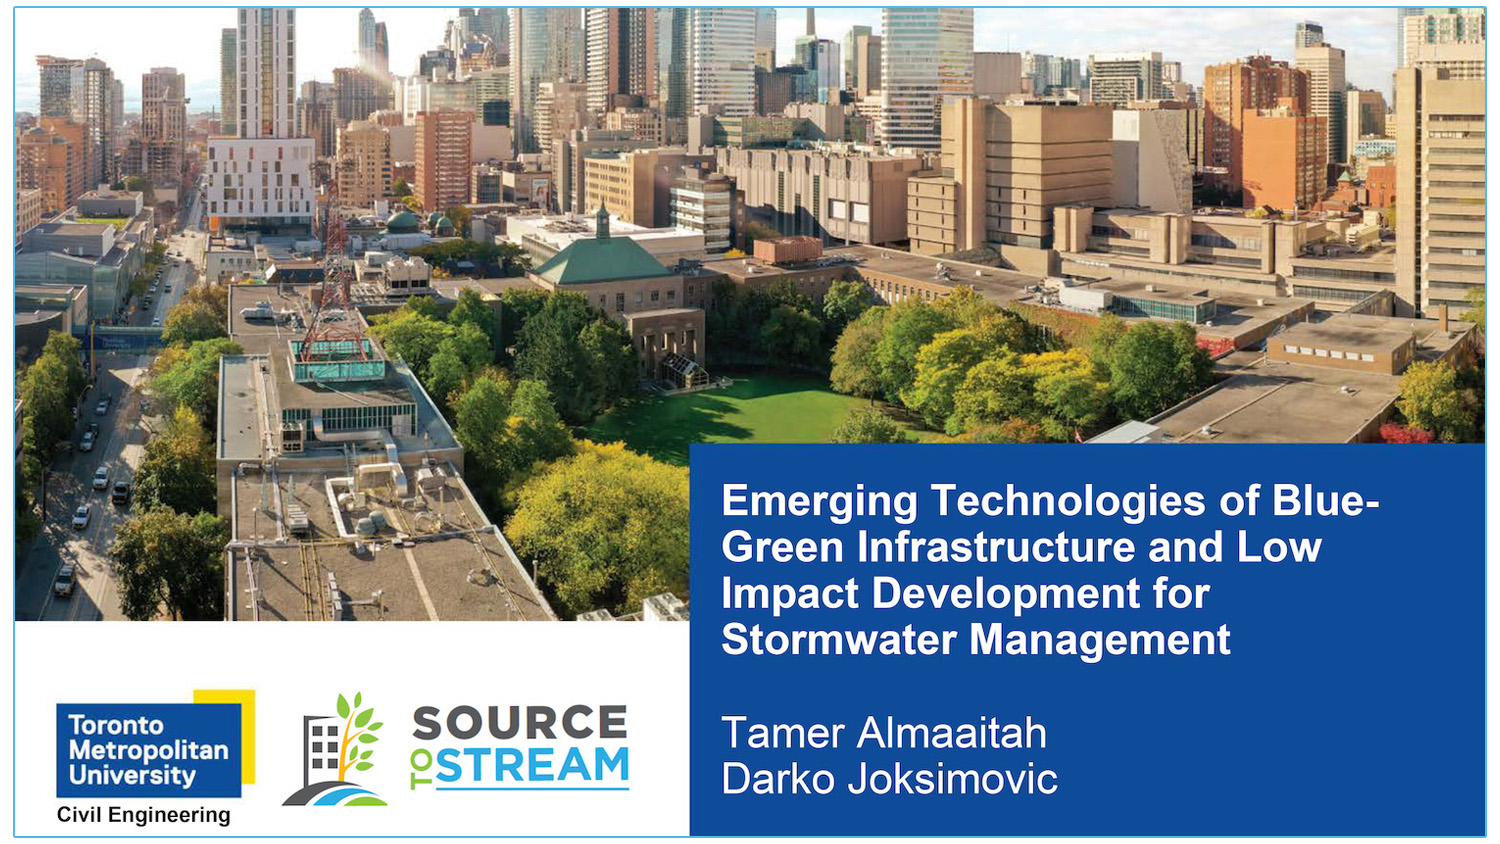 Emerging Technologies of Blue-Green Infrastructure and Low Impact Development for Stormwater Management - Presenter - Darko Joksimovic, Toronto Metropolitan University